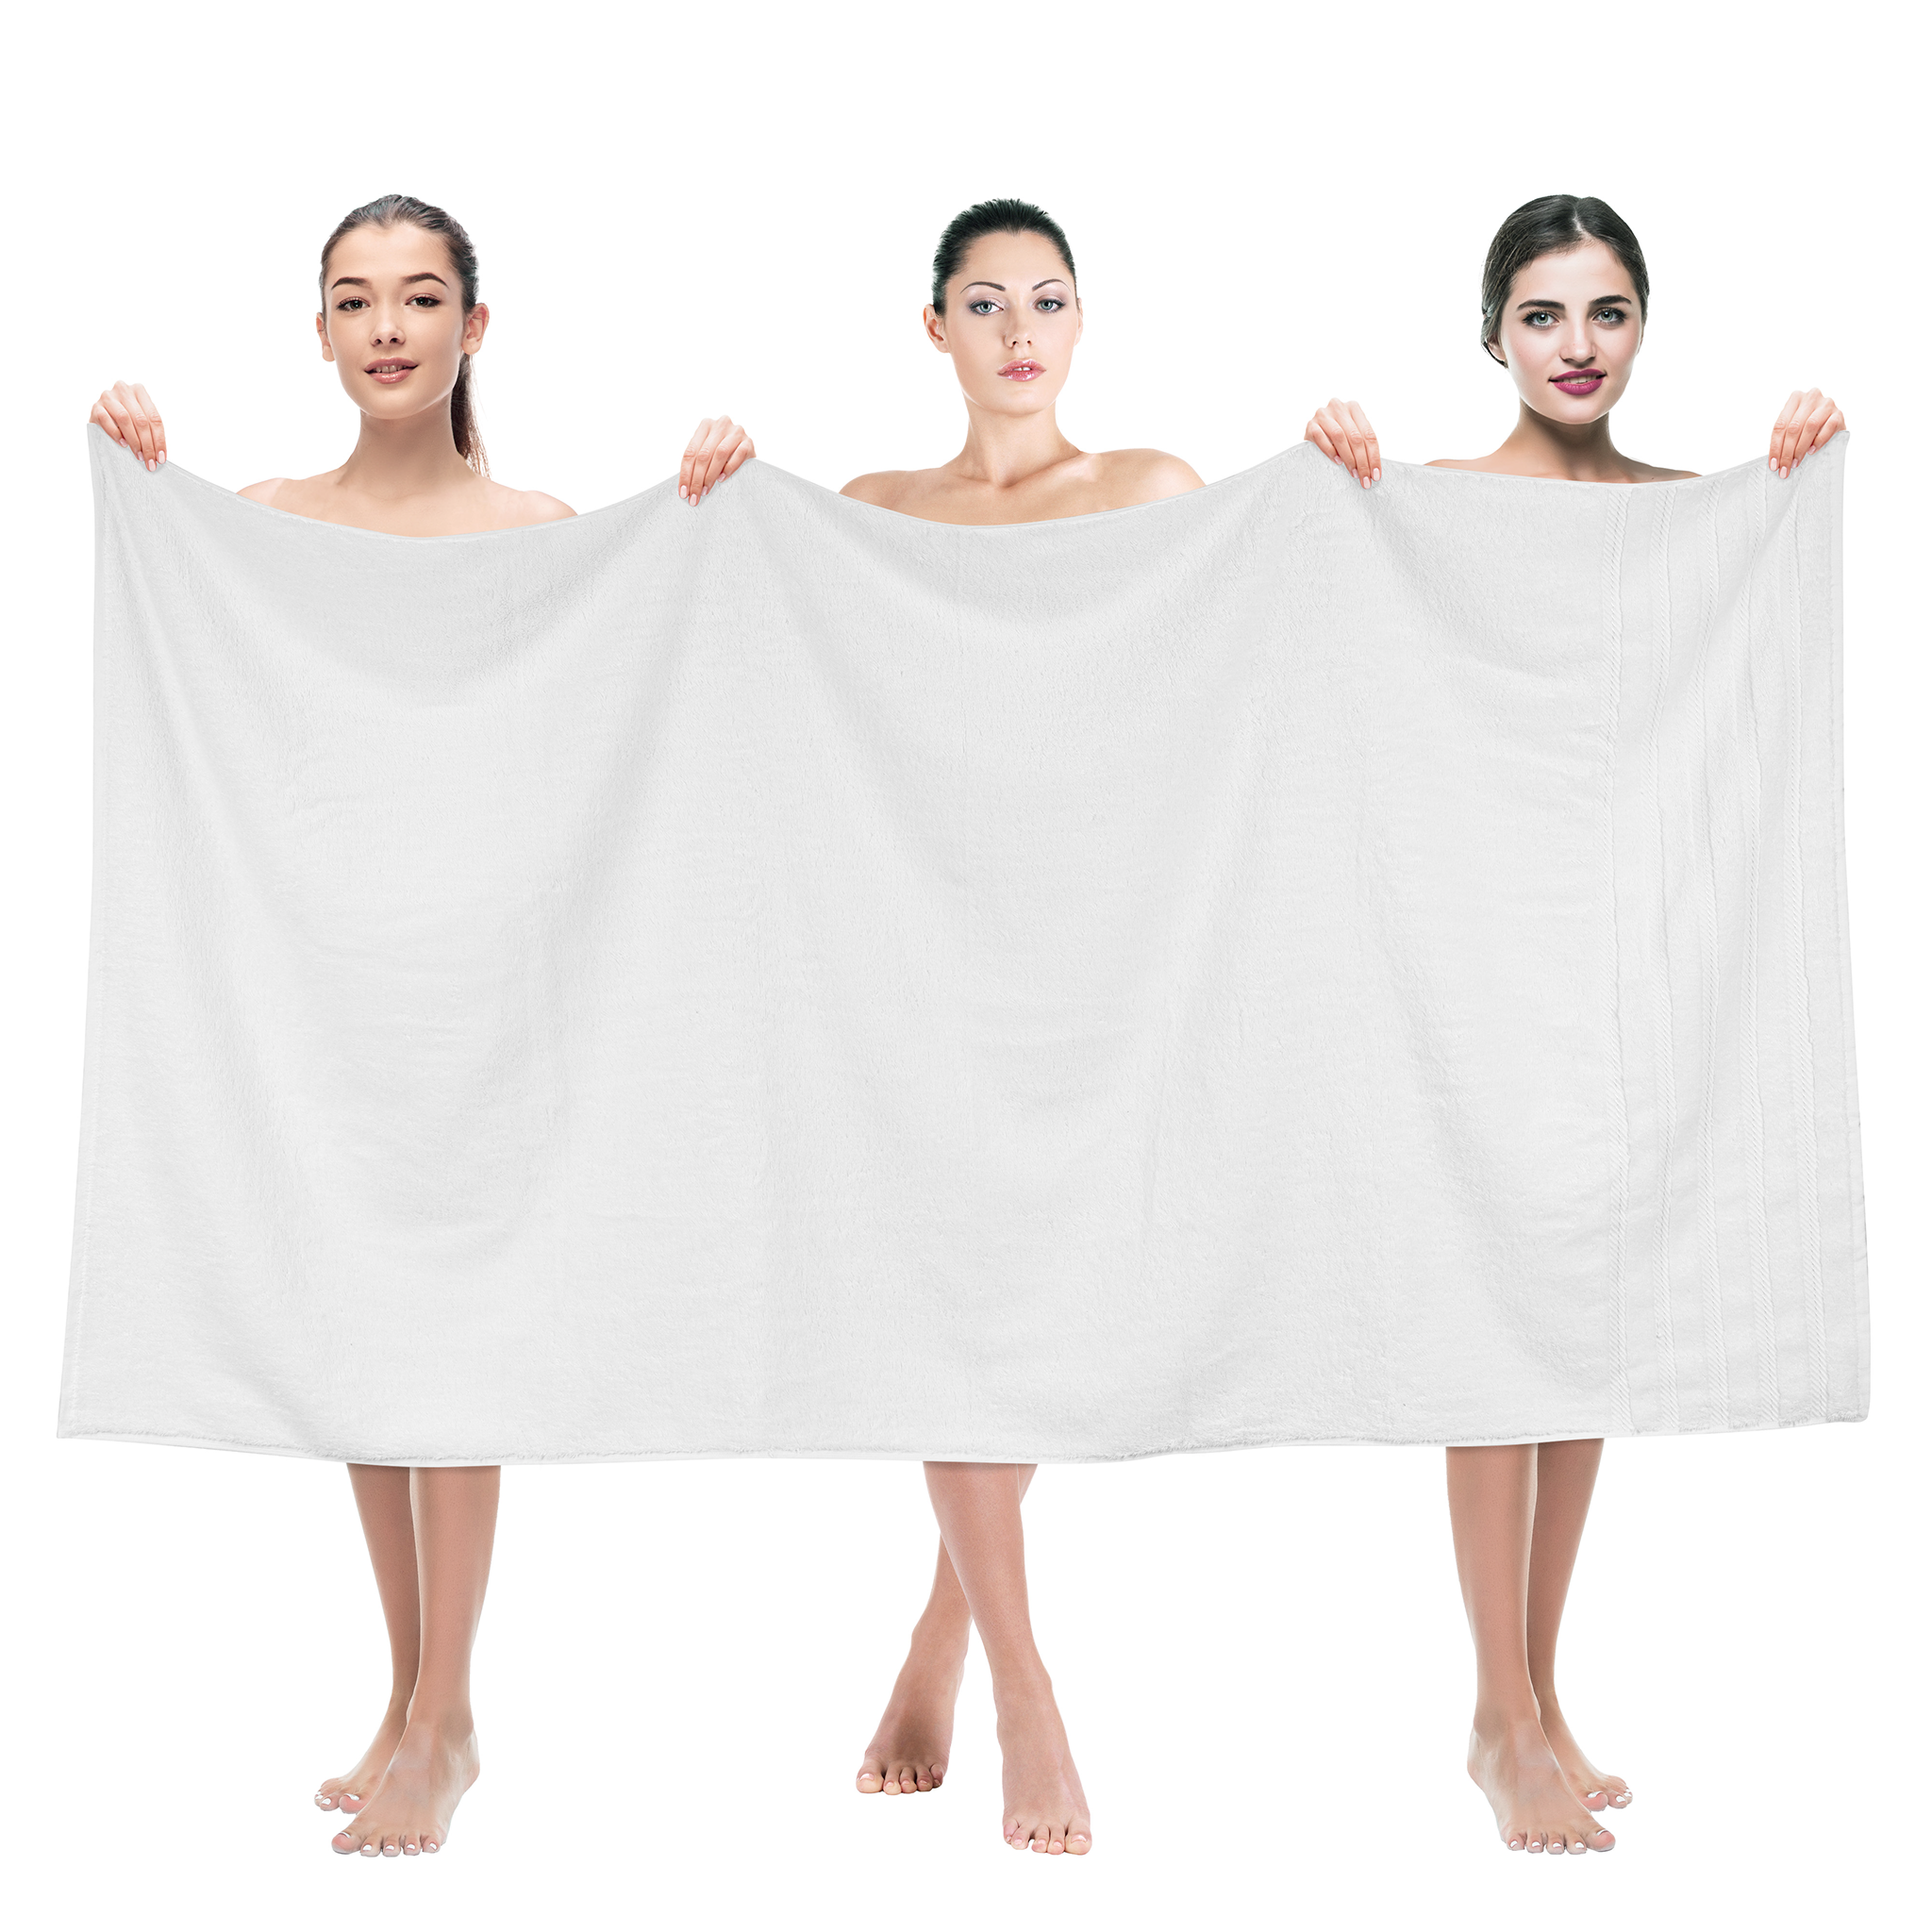 American Soft Linen - 35x70 Jumbo Bath Sheet Turkish Bath Towel - 16 Piece Case Pack - White - 1